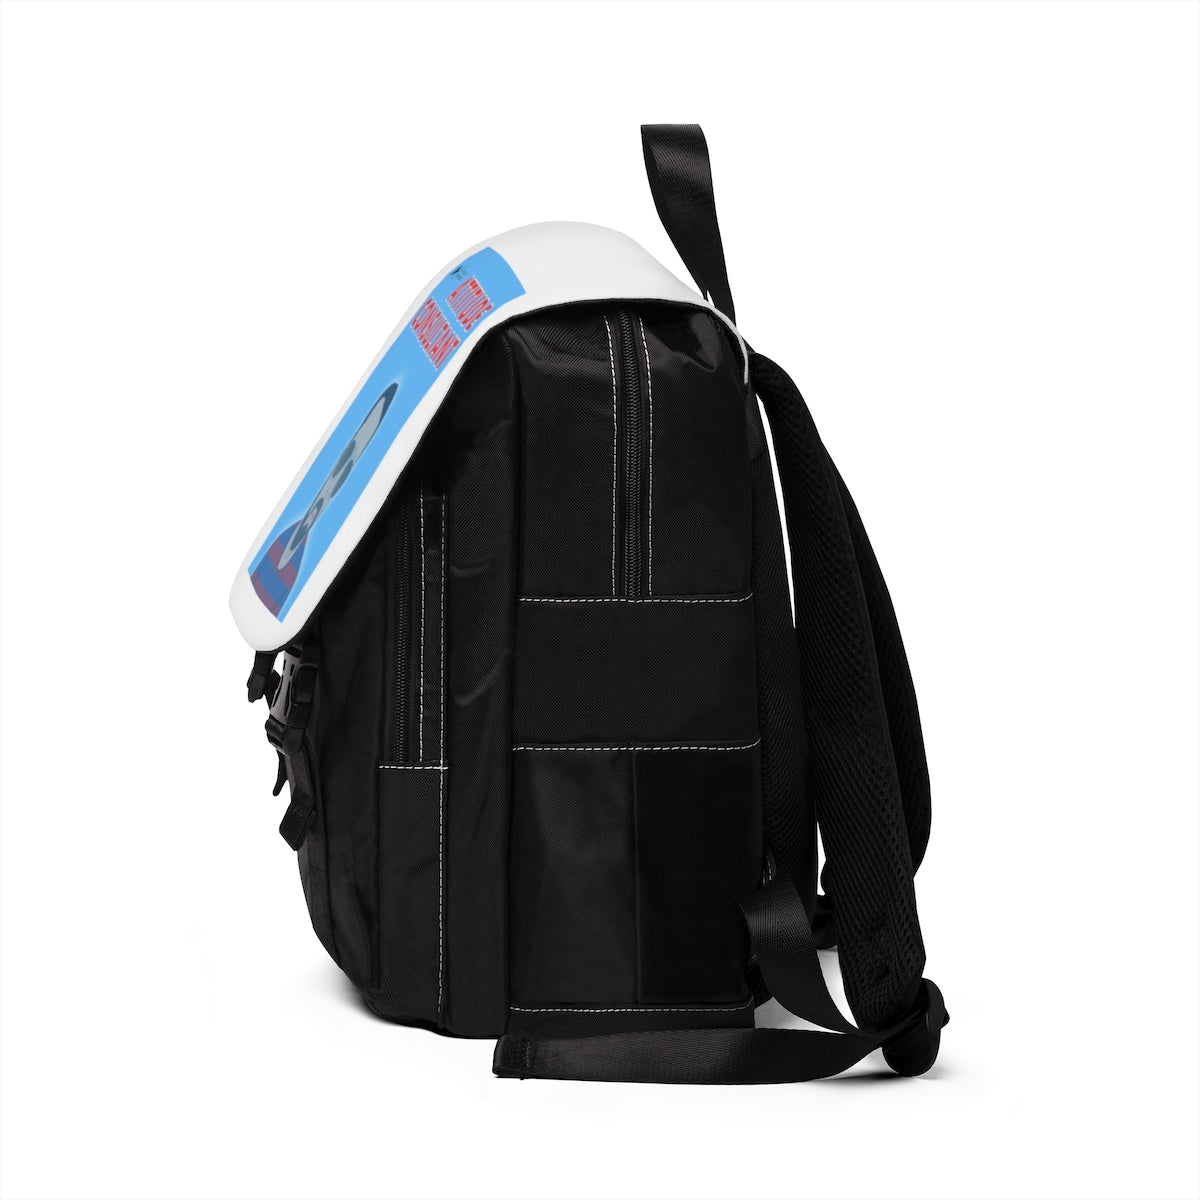 Attitude Consultant Unisex Casual Shoulder Backpack